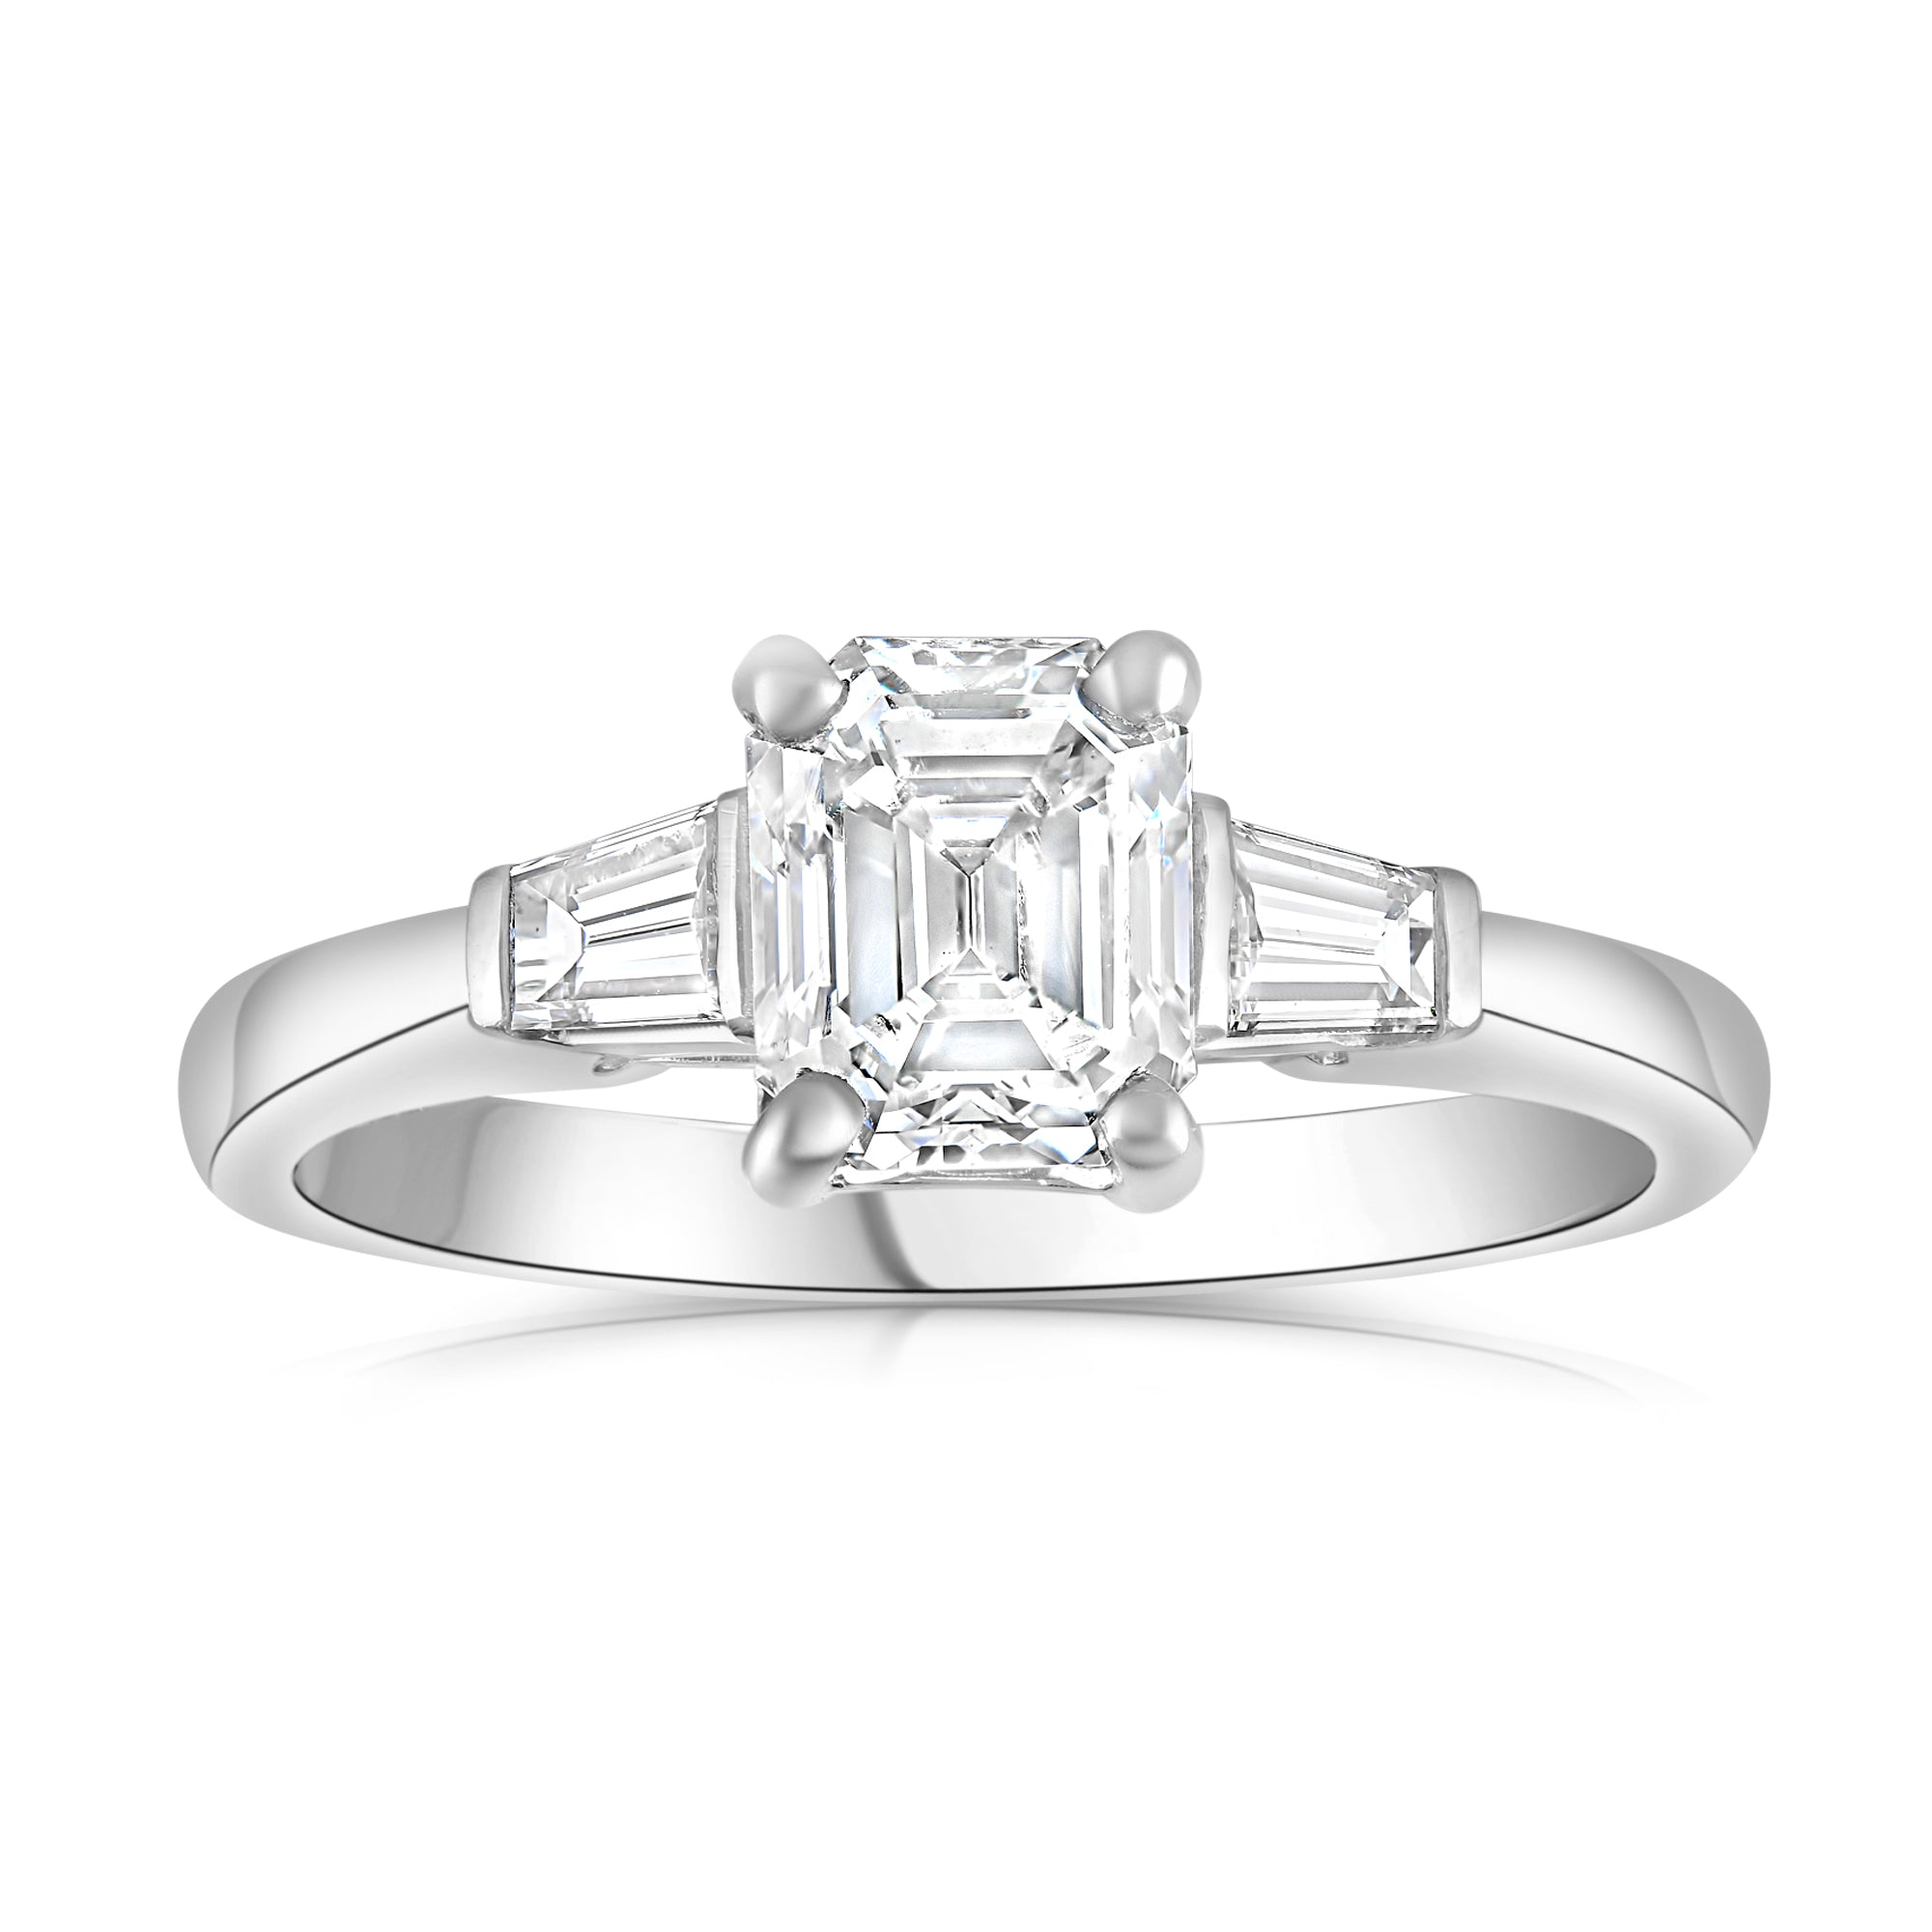 0.83ct radiant cut diamond engagement ring, platinum, E colour, VS2 clarity, GIA certified